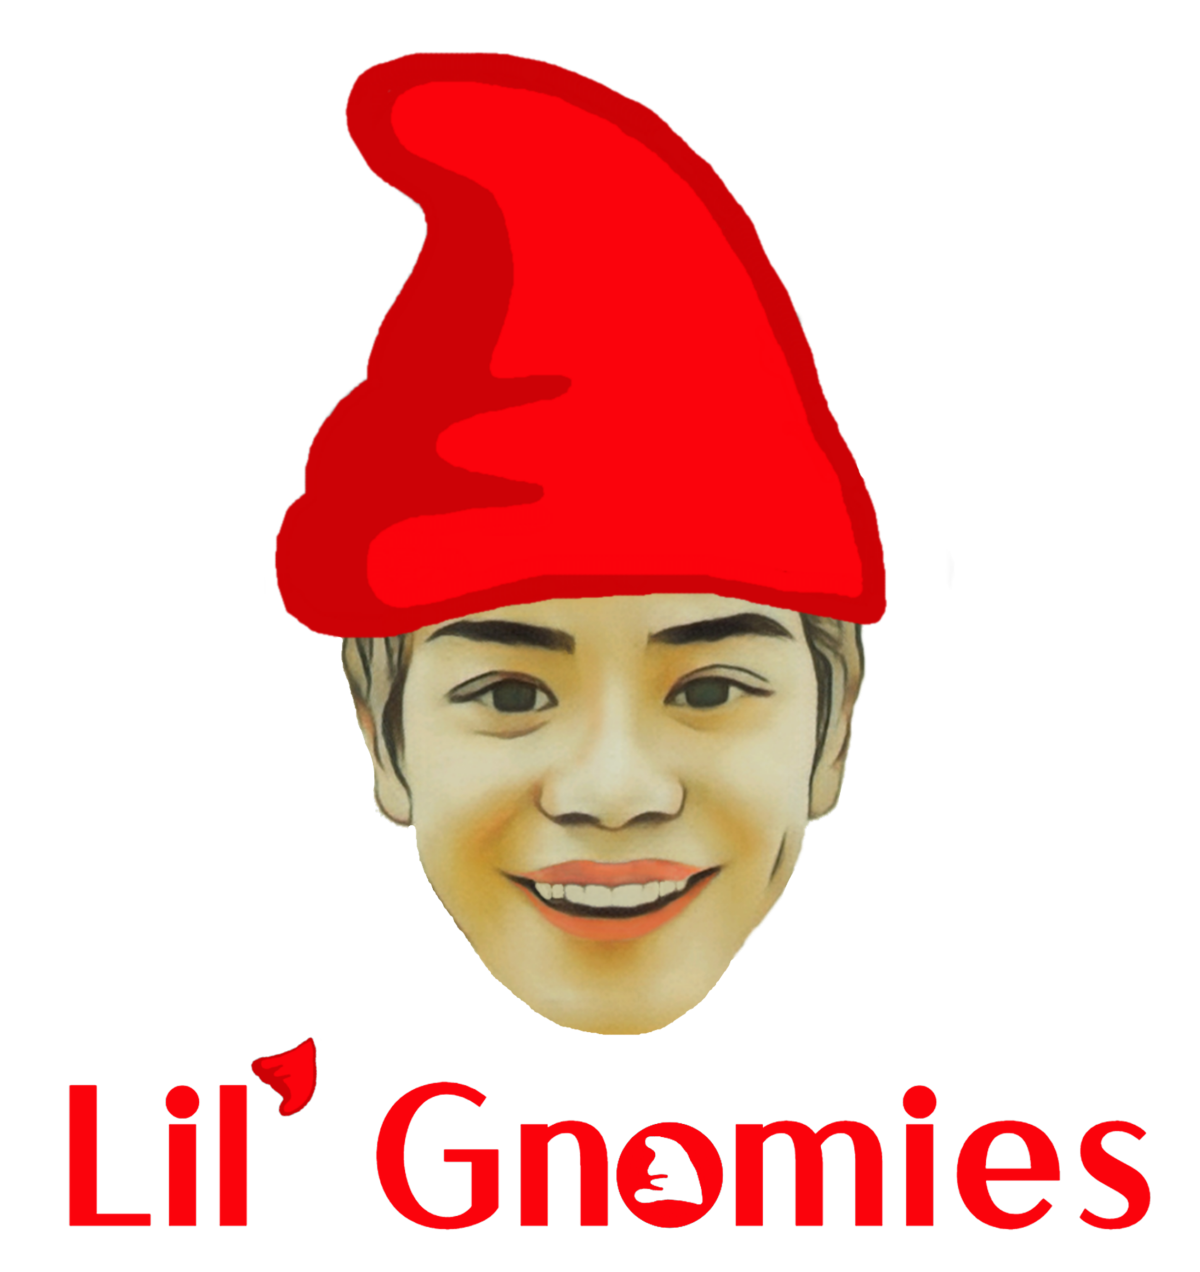 Lil Gnomies